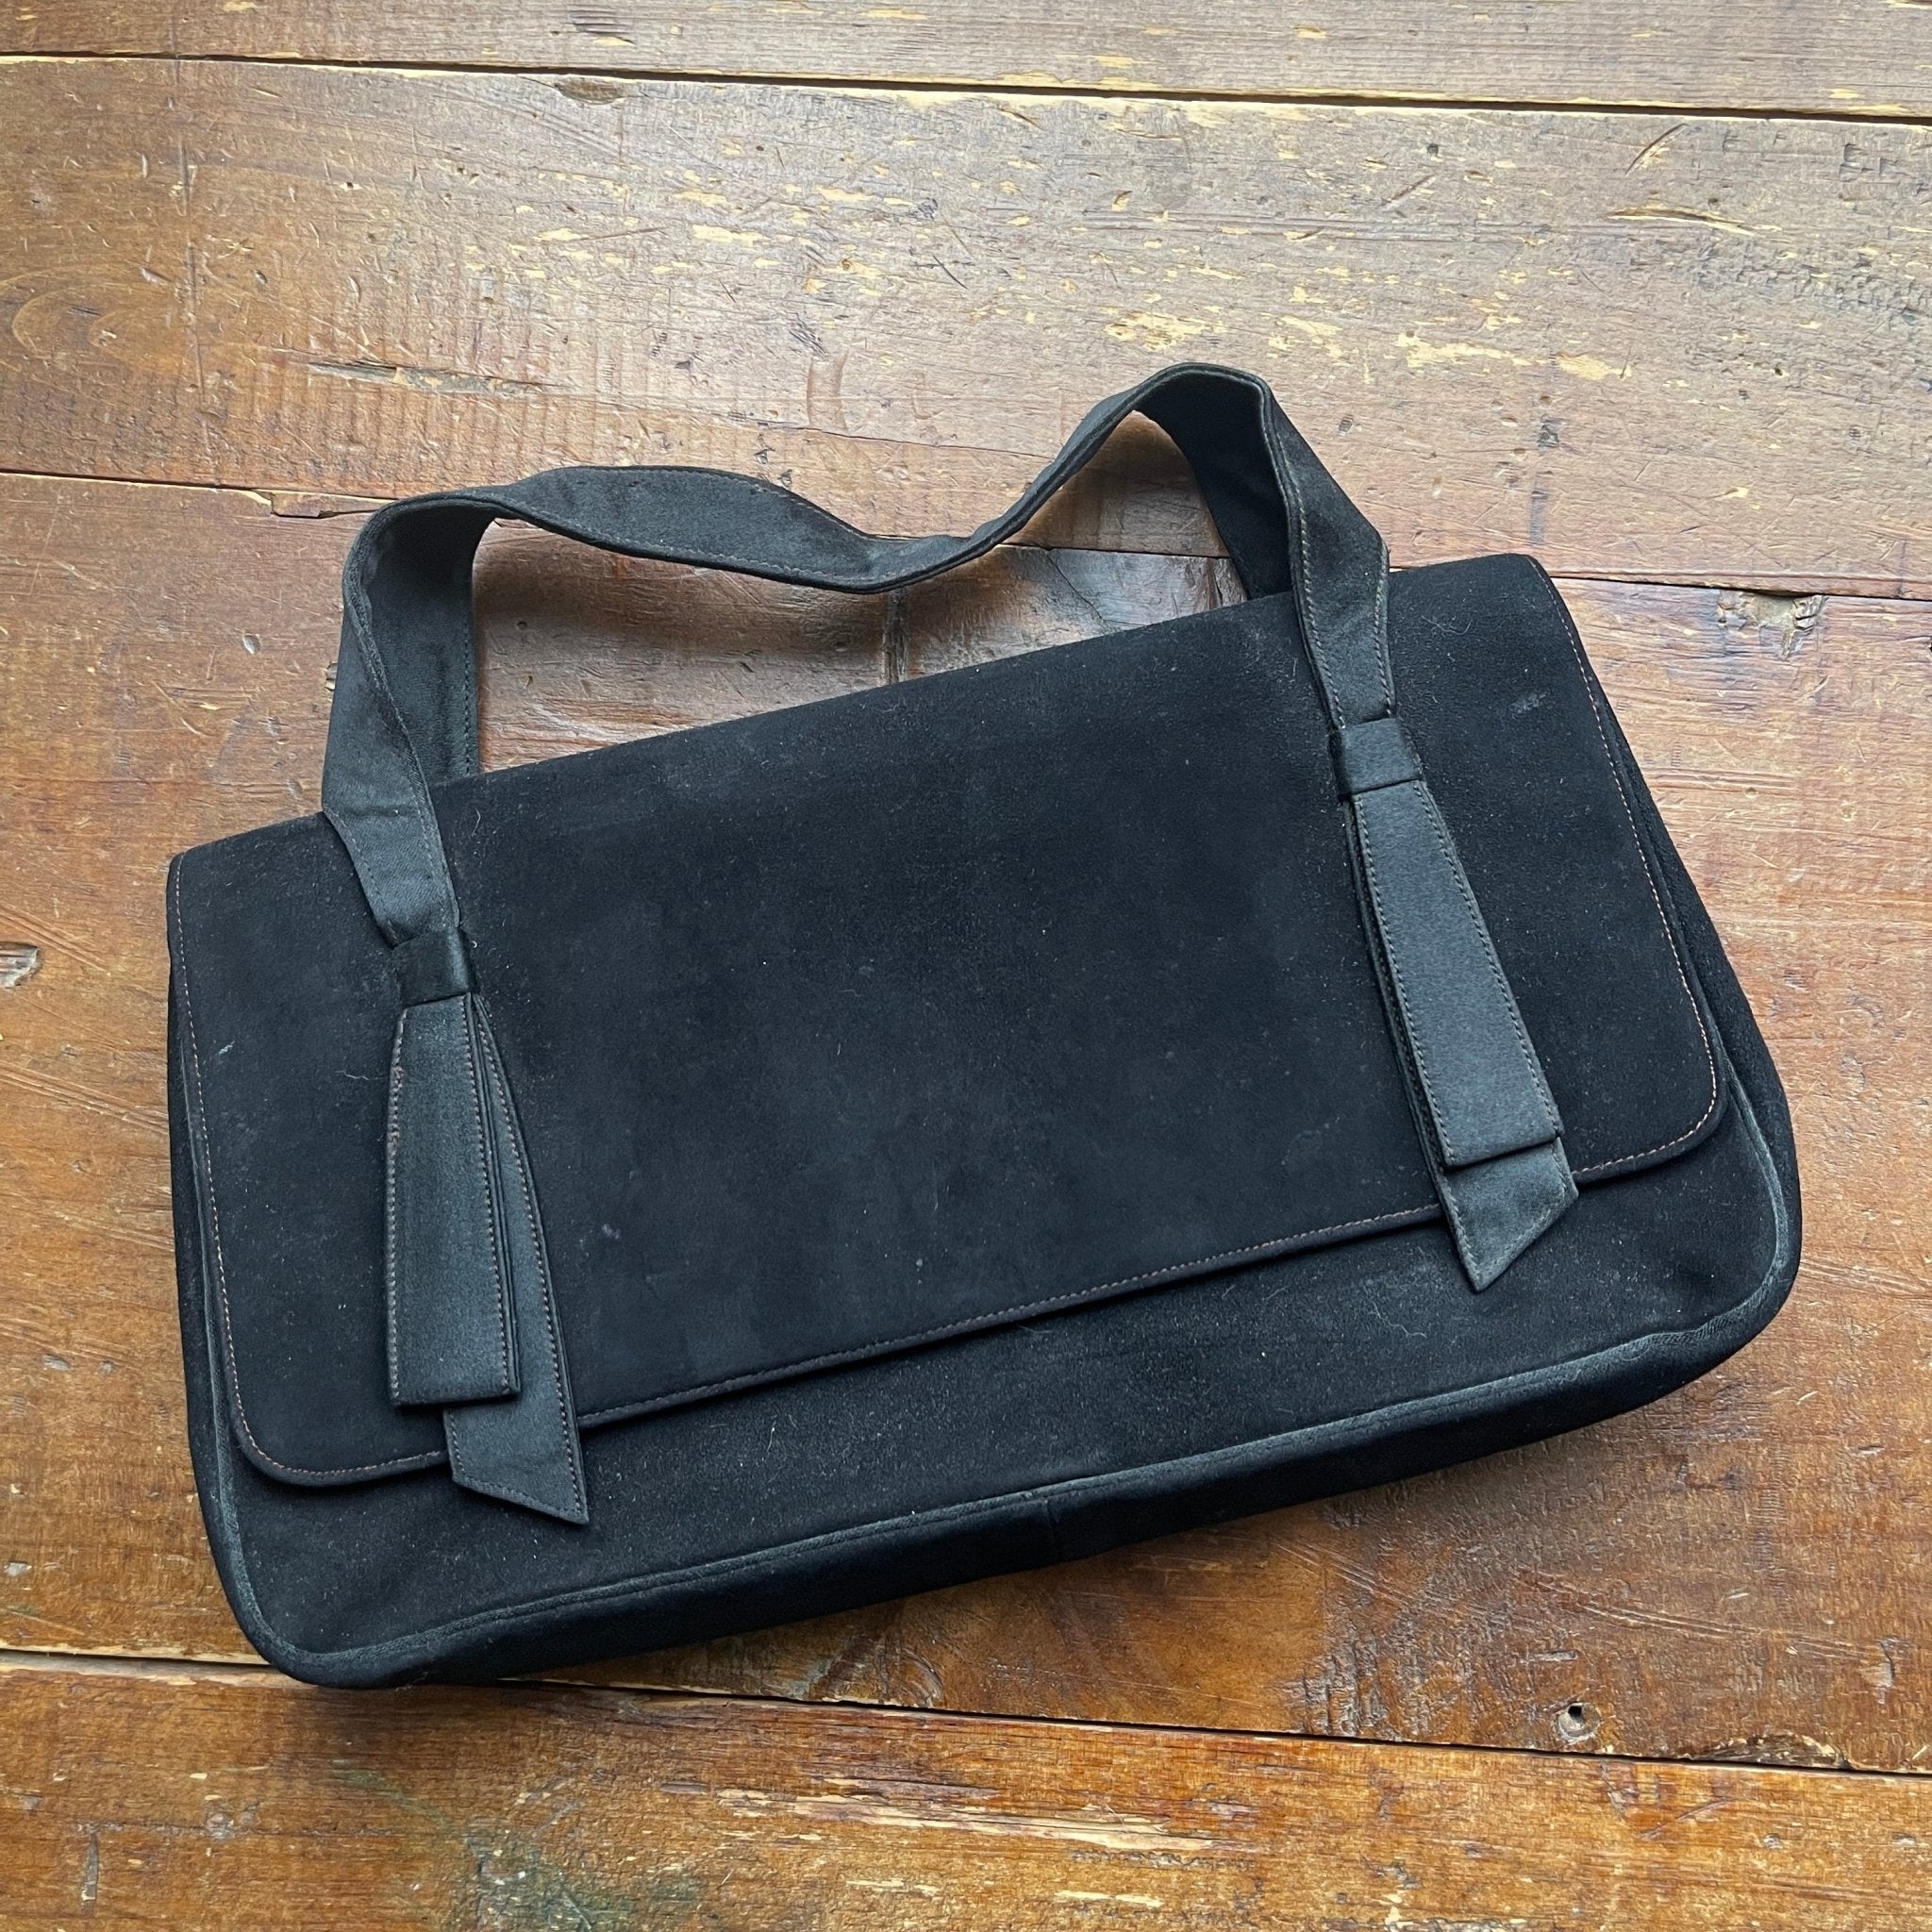 Black Handbags, Purses & Wallets for Women | Nordstrom